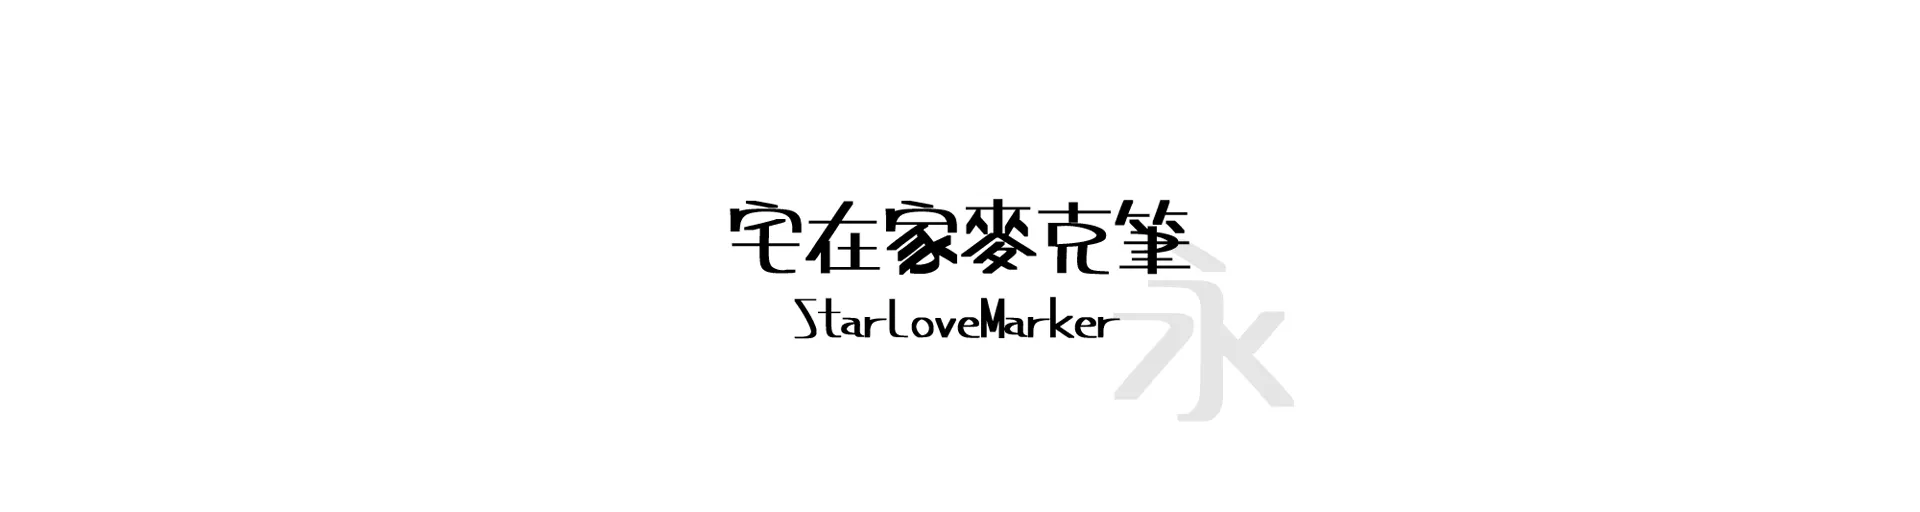 StarLoveMarker